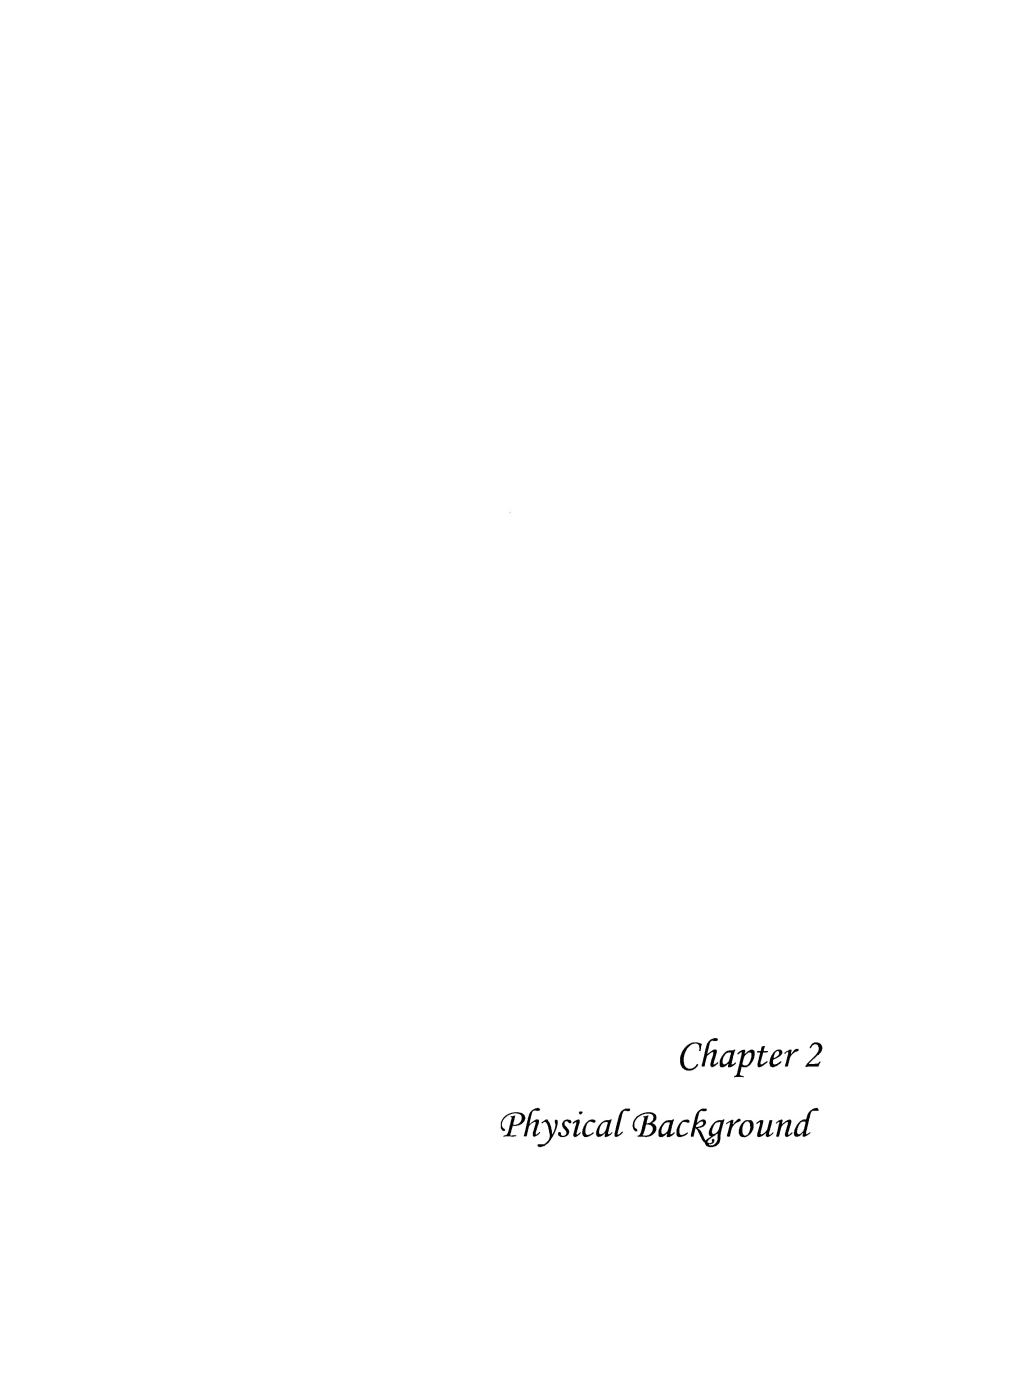 Chapter 2 (Pfiysicac (Bac^Rouncc CHAPTER 2 PHYSICAL BACKGROUND